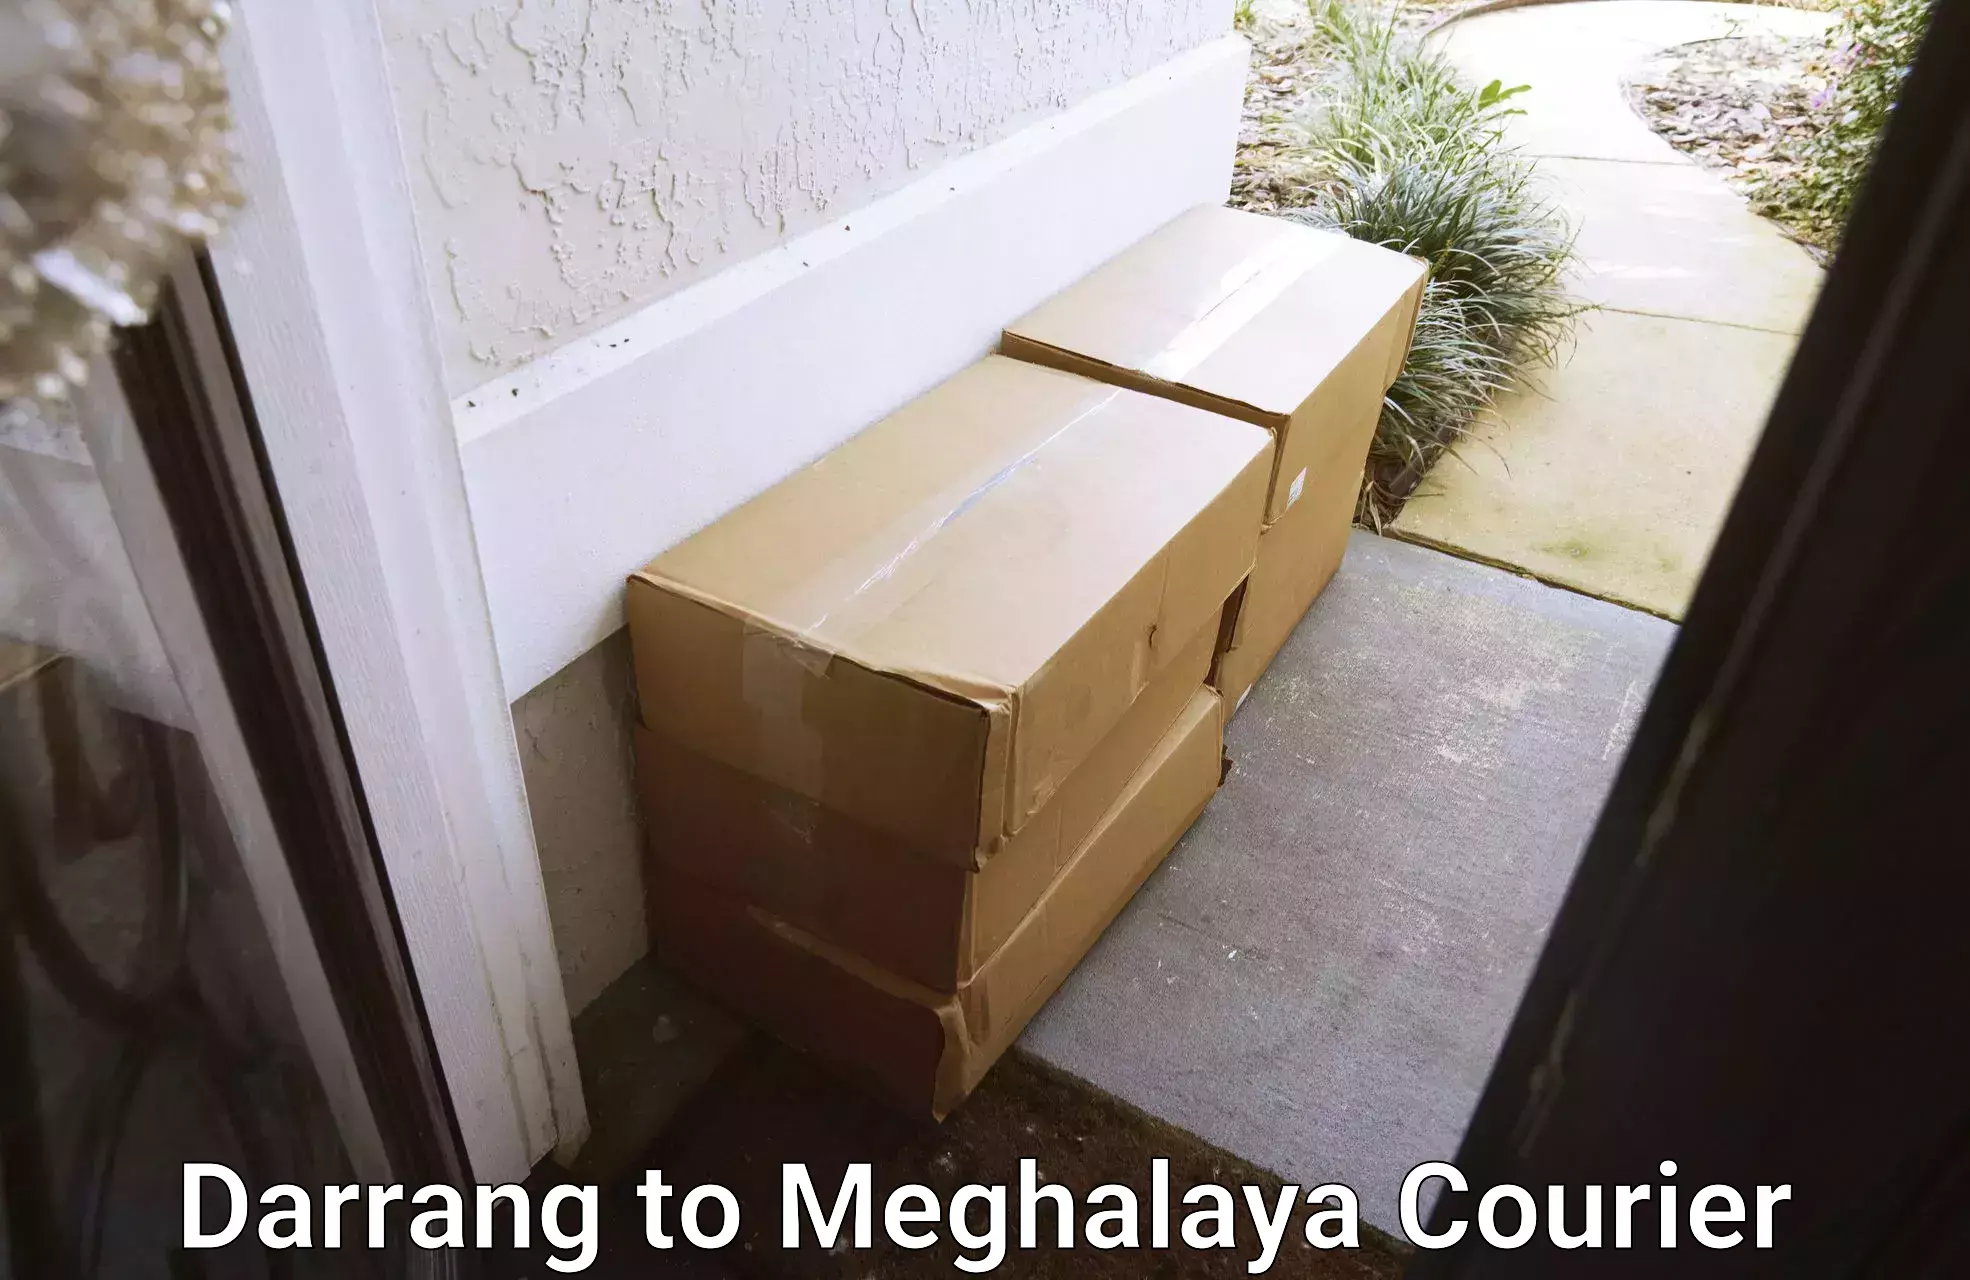 Express delivery capabilities Darrang to Meghalaya